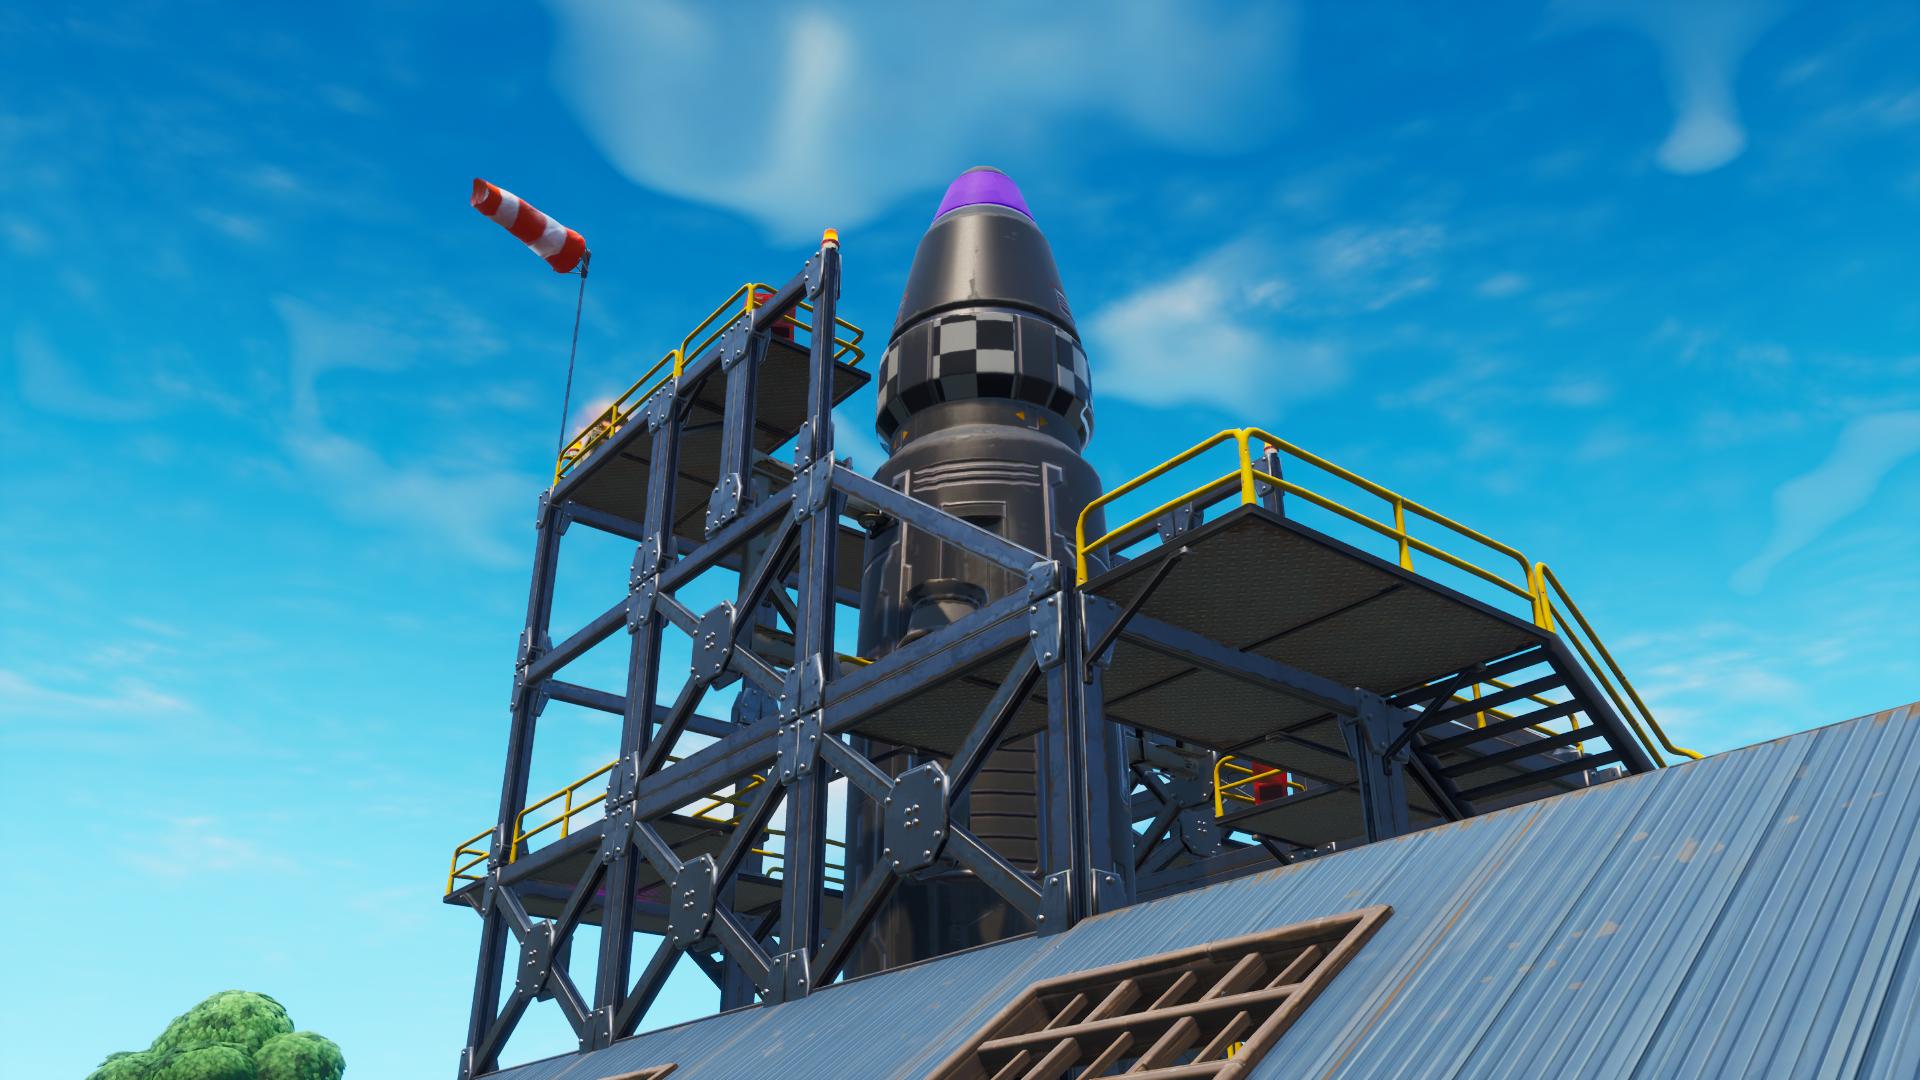 Completed Rocket Fortnite live event soon